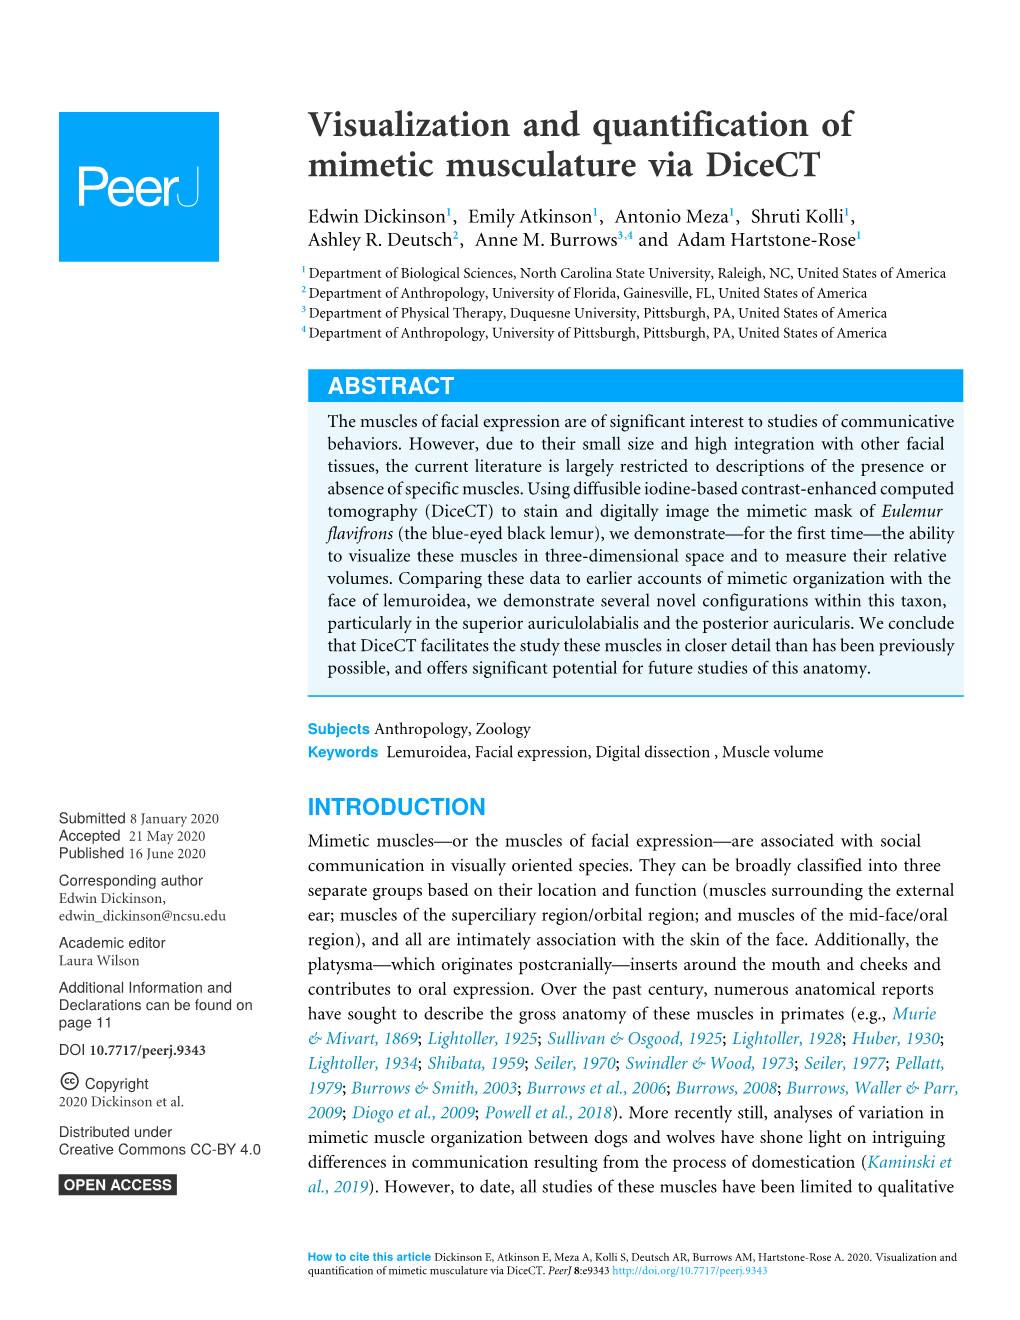 Visualization and Quantification of Mimetic Musculature Via Dicect